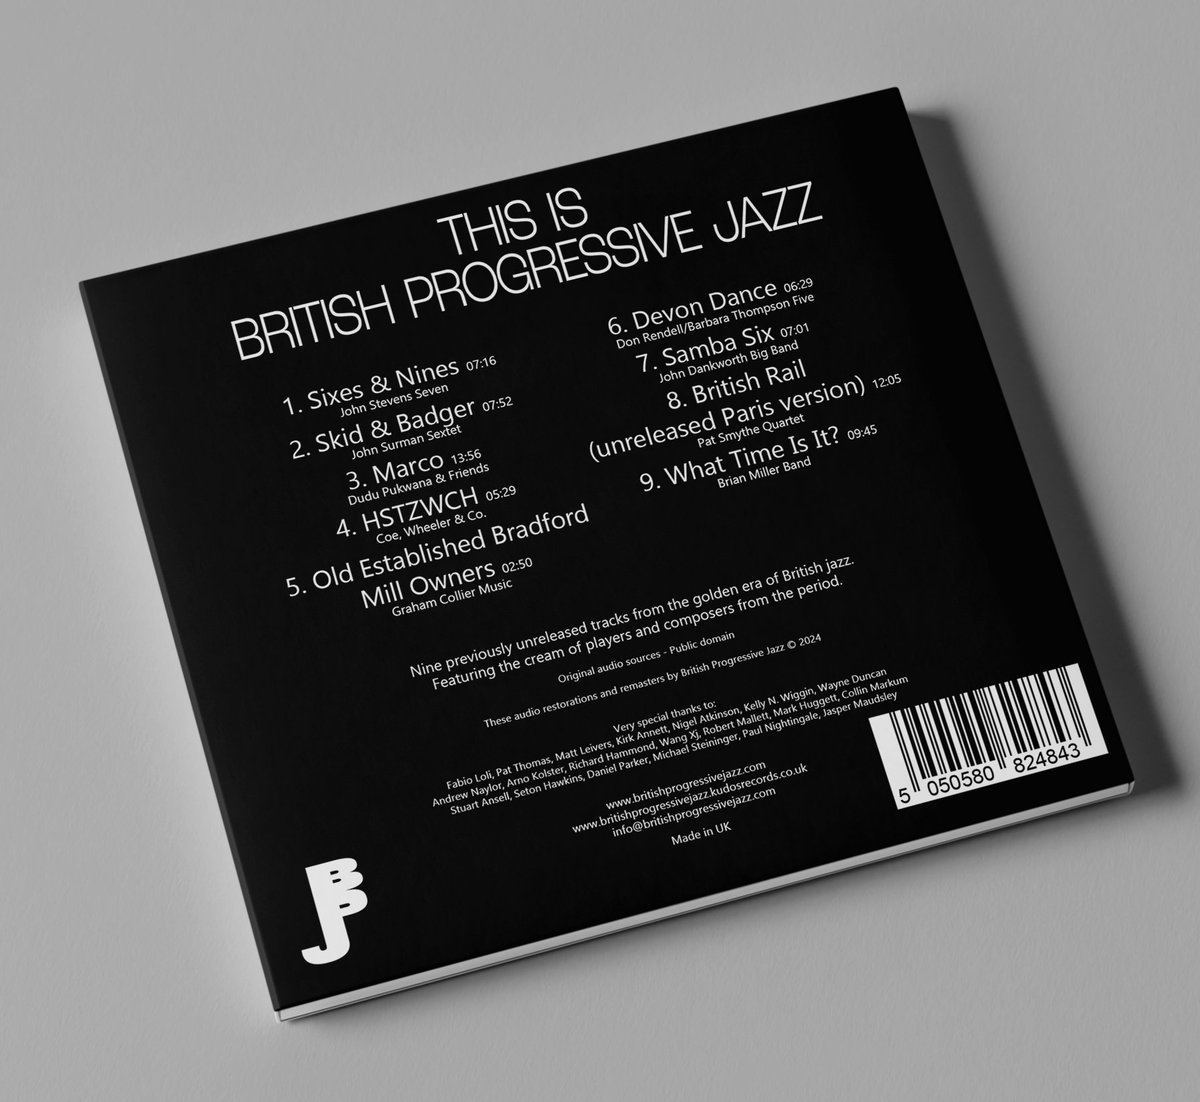 Coming soon...
…ishprogressivejazz.kudosrecords.co.uk/release/bpj025…
#Jazz #JazzRock #JazzFusion #ProgJazz #ProgRock